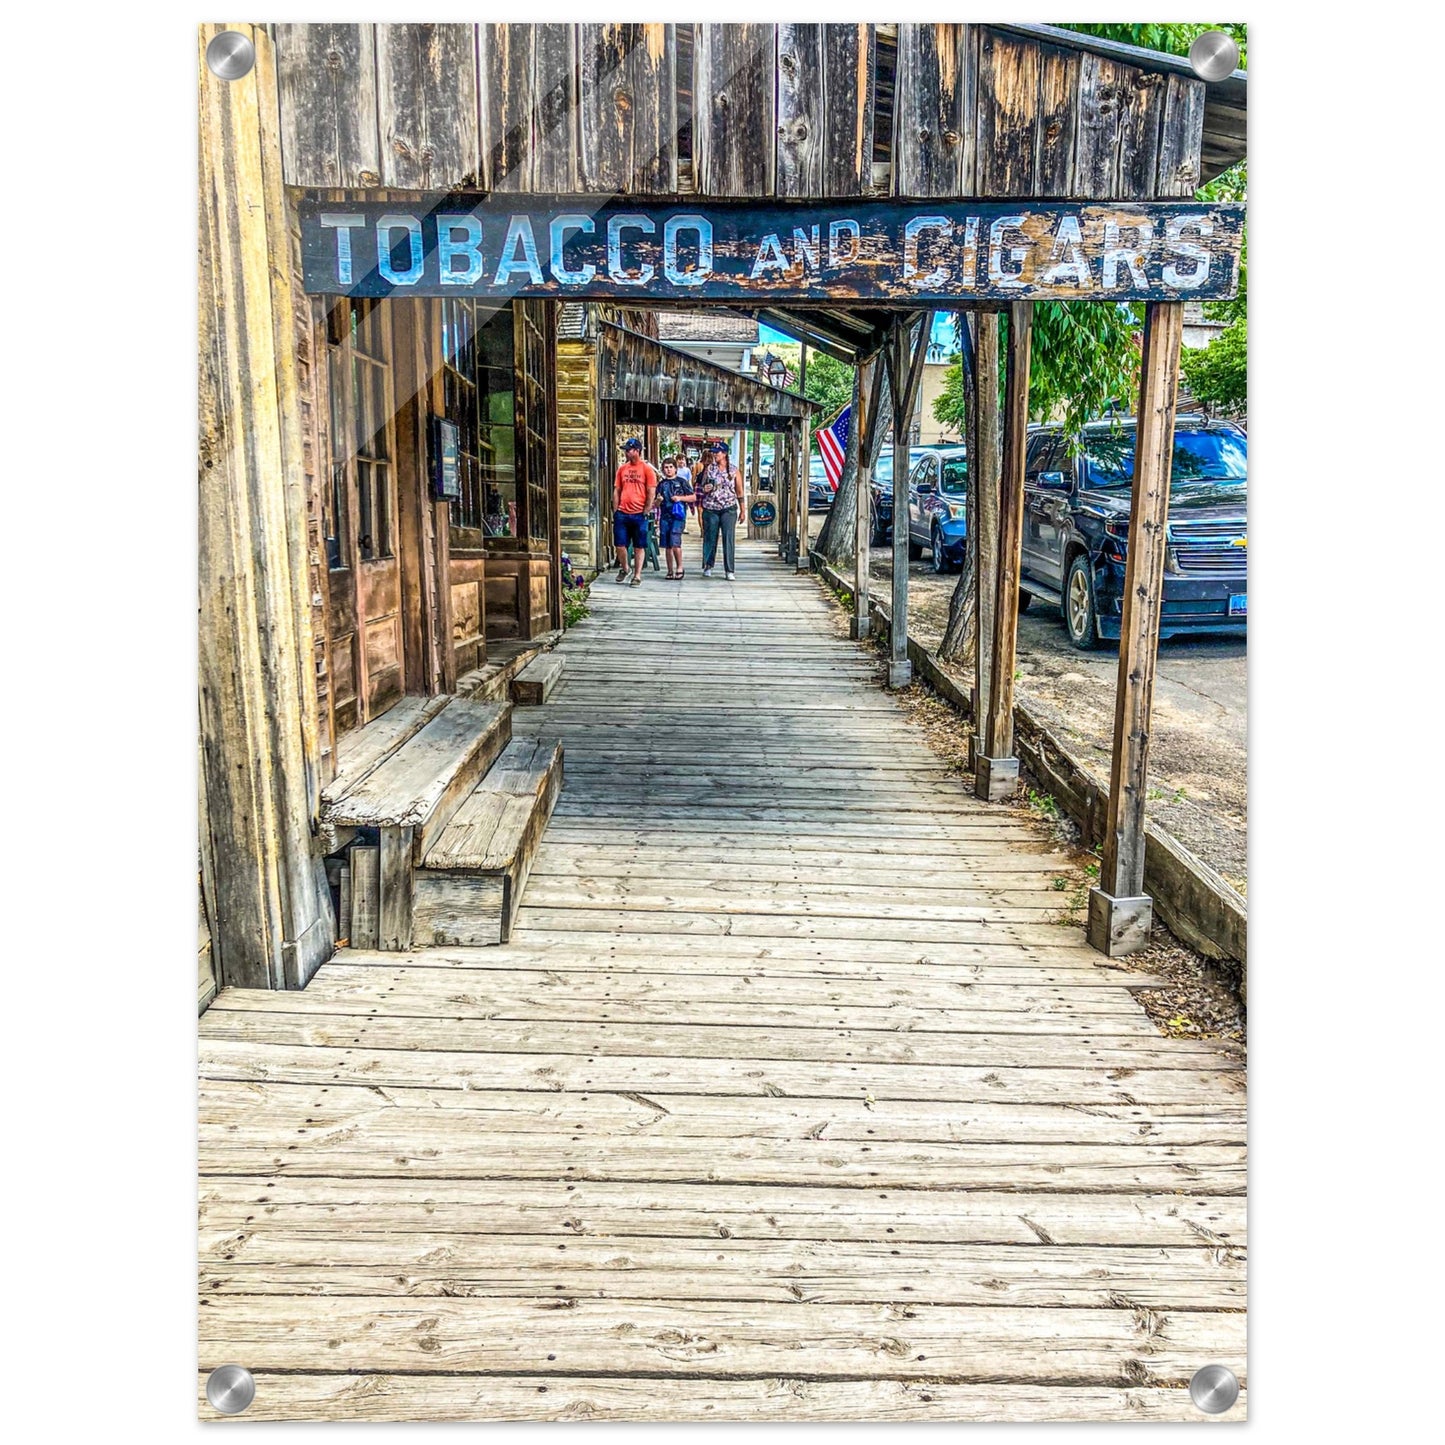 Tobacco & Cigars; Virginia City, Montana Acrylic Print